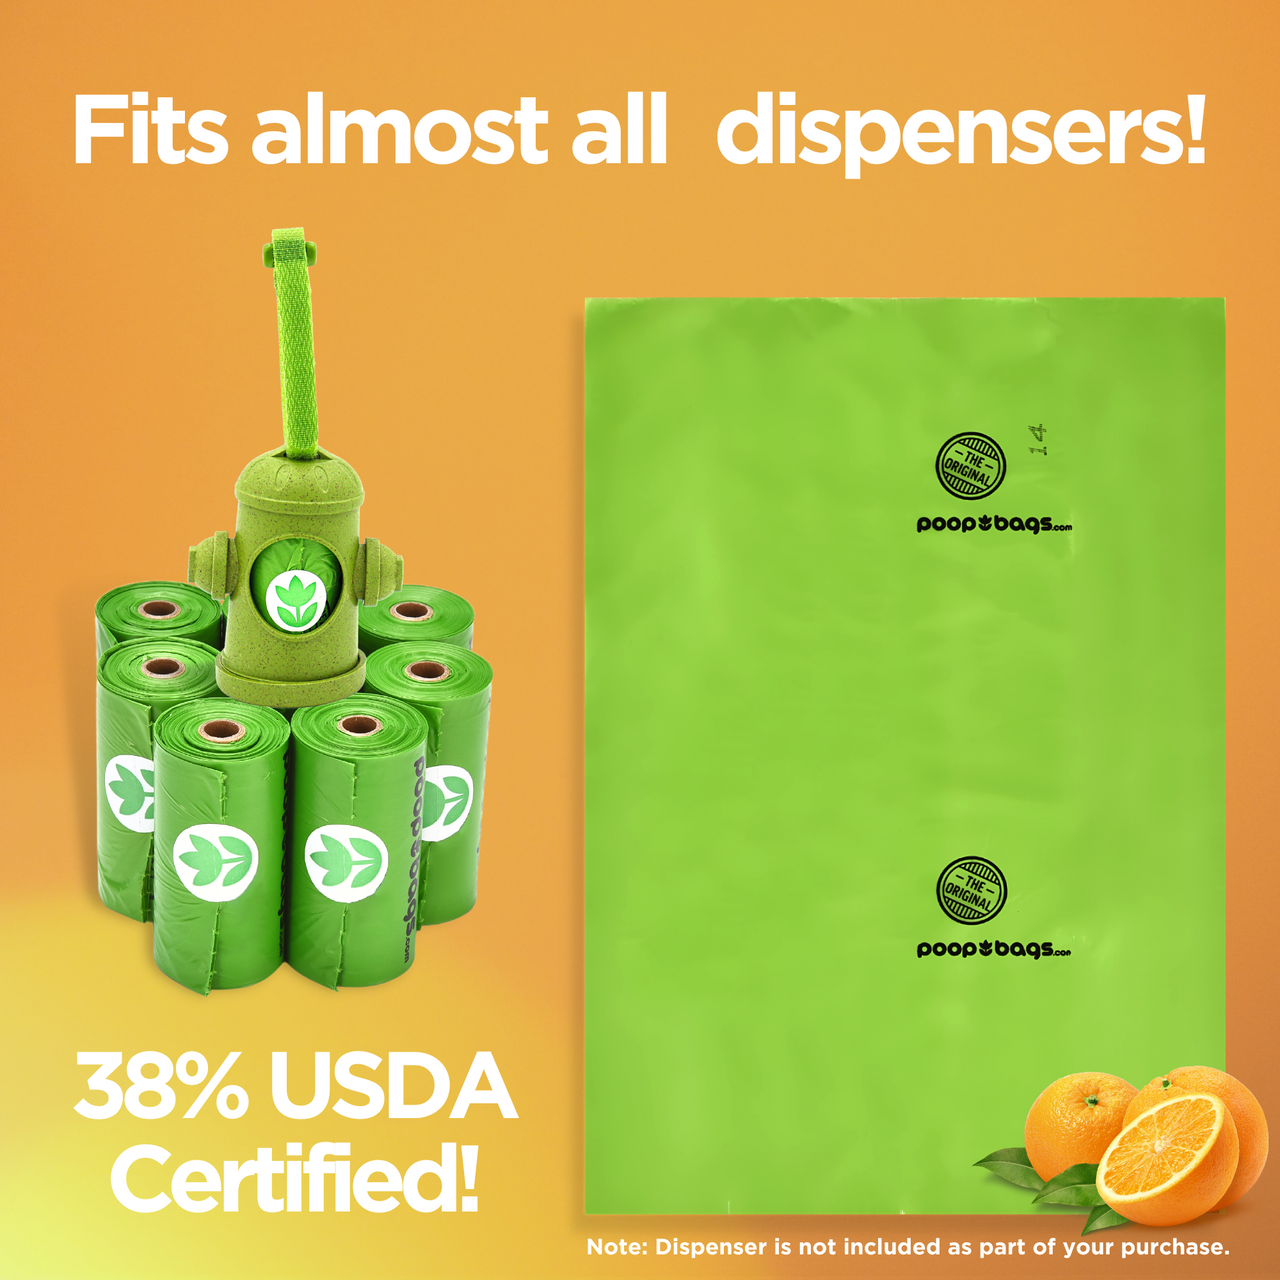 The Original Poop Bags® 960 USDA Certified Biobased Orange Scented Countdown Rolls®